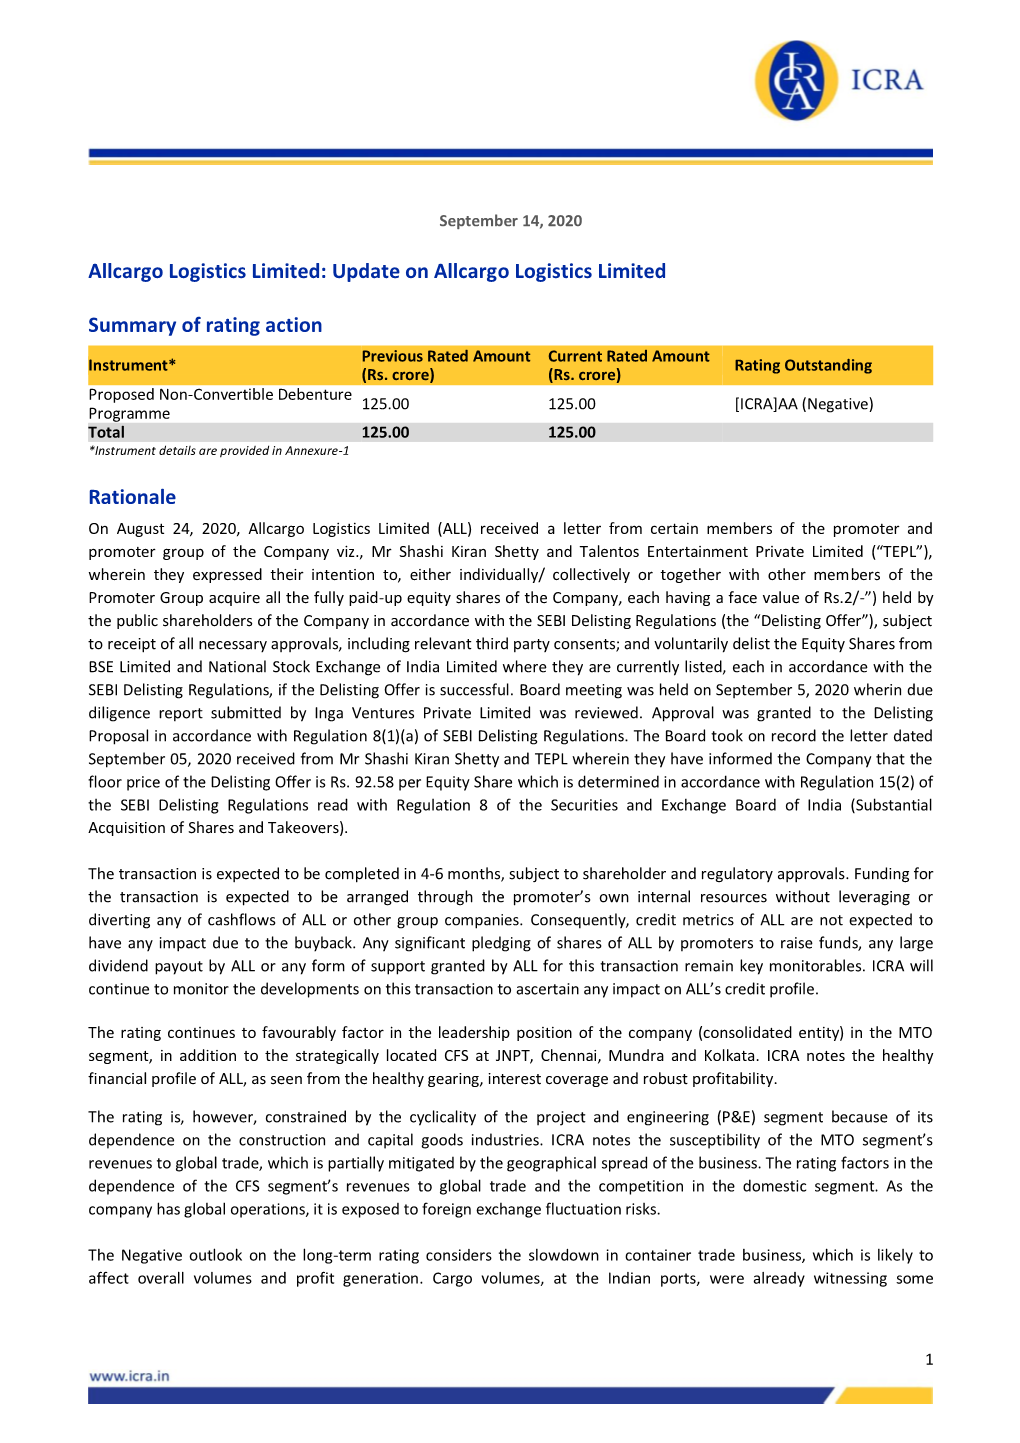 Allcargo Logistics Limited: Update on Allcargo Logistics Limited